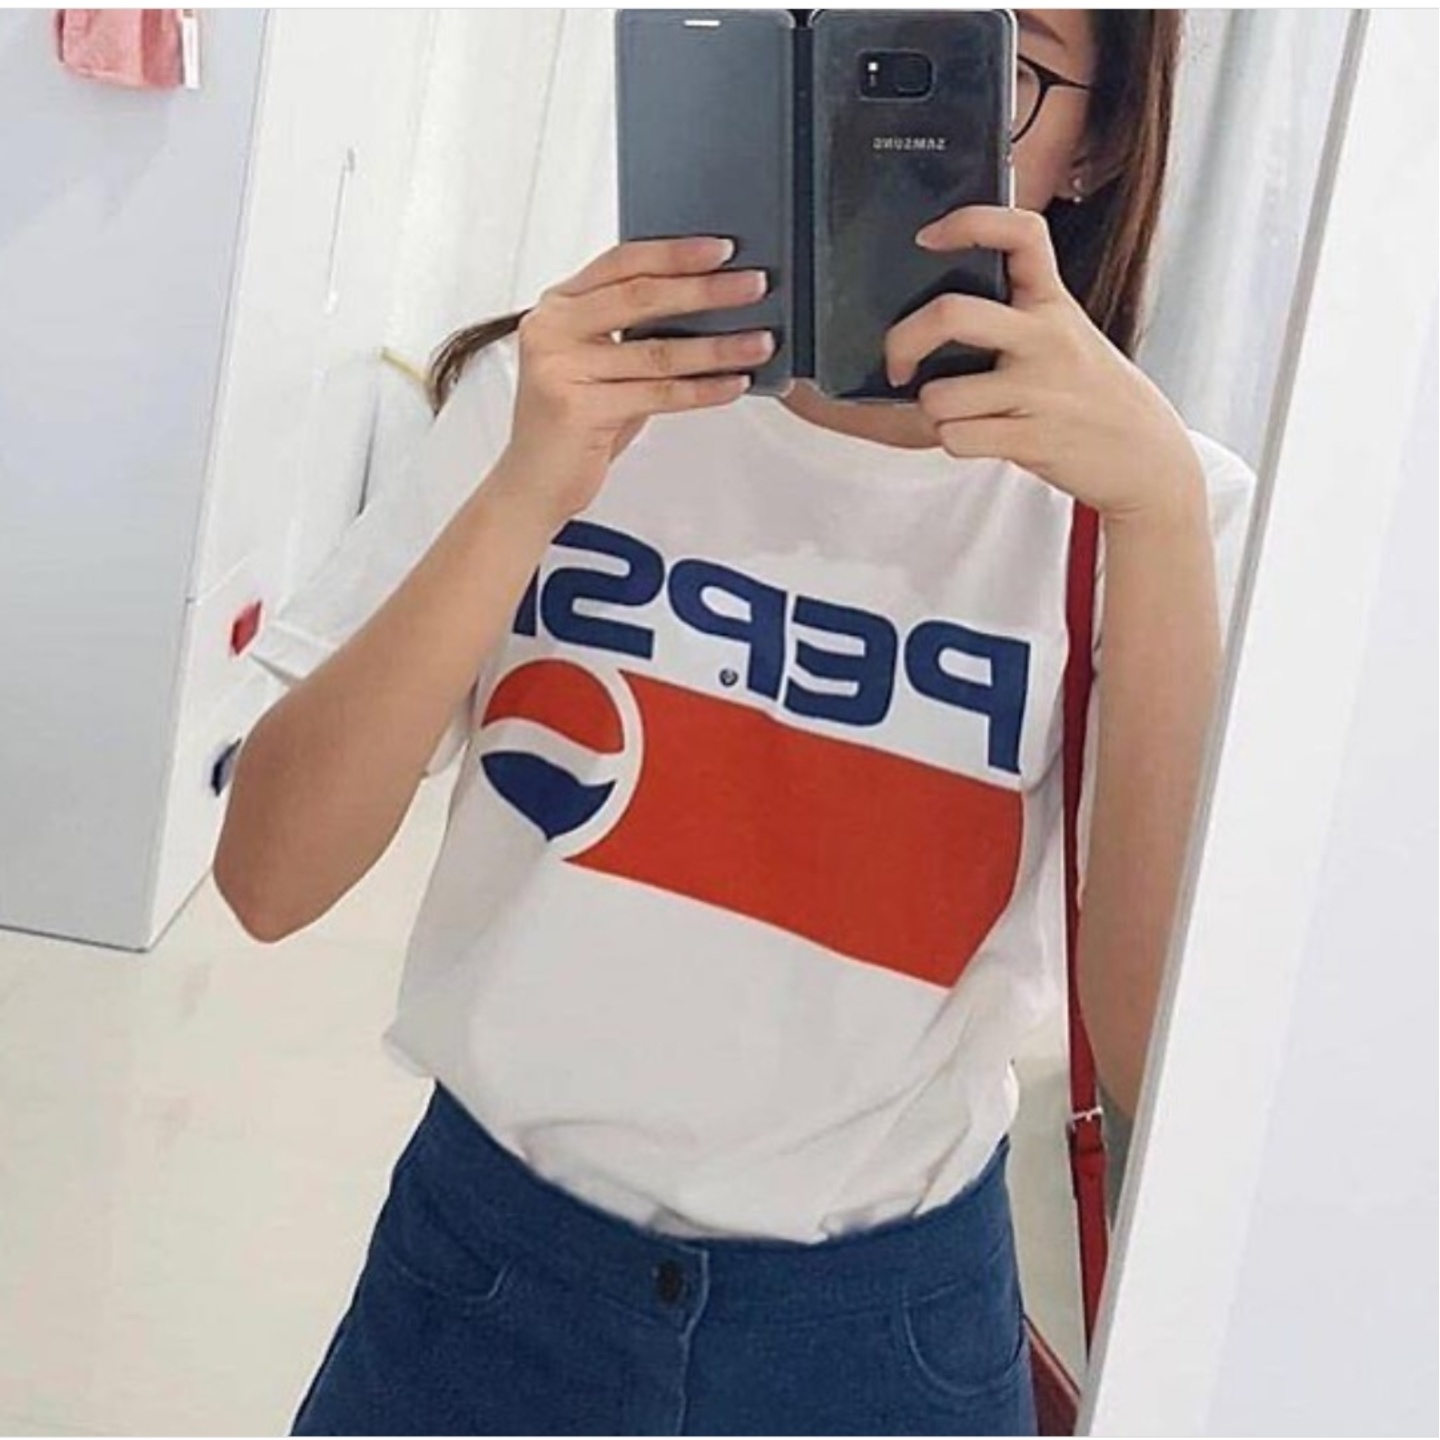 Pepsi Print T-Shirt